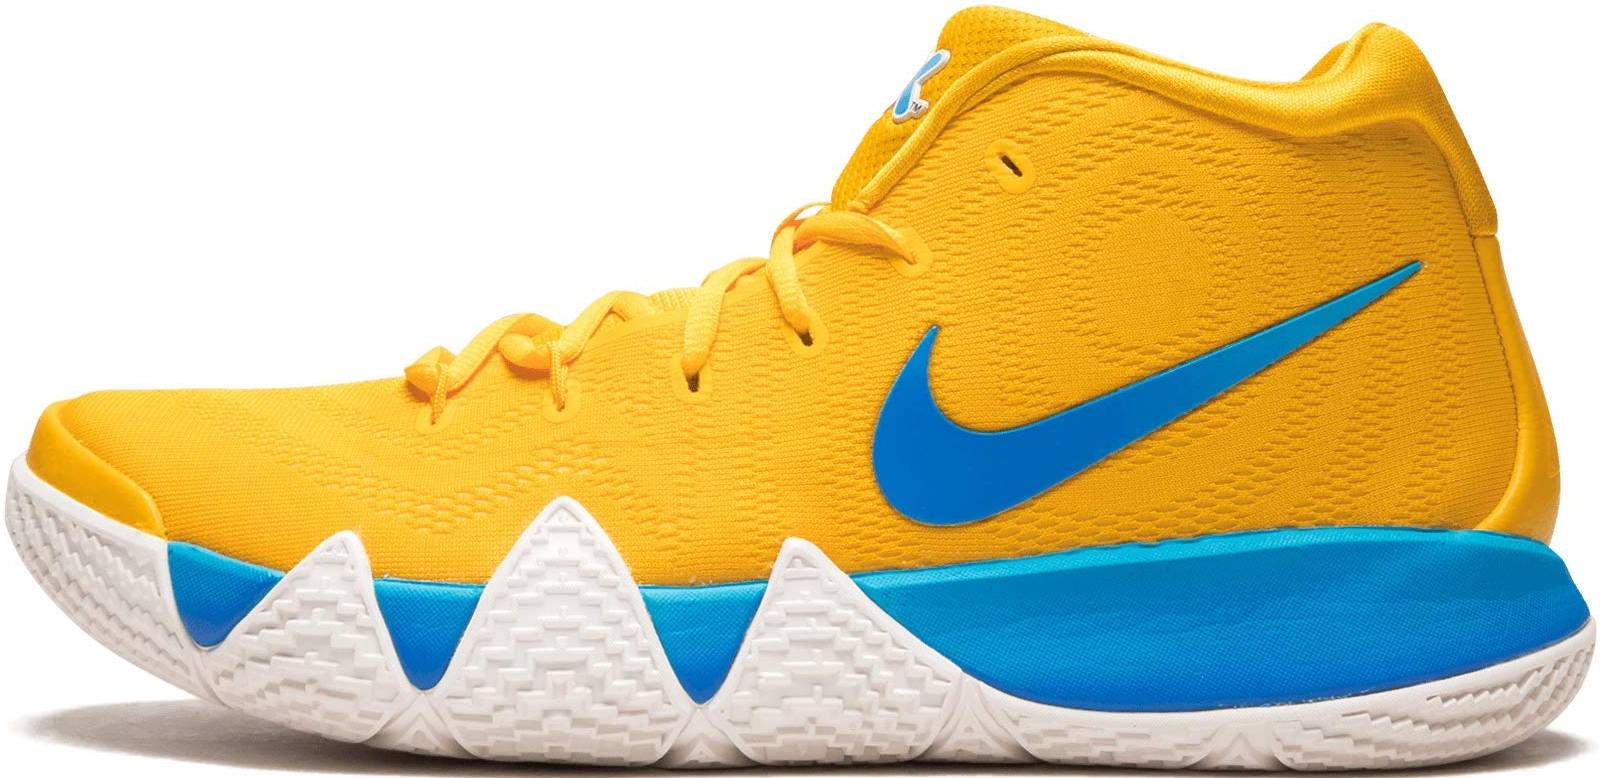 Yellow Nike Basketball Shoes (9 Models 